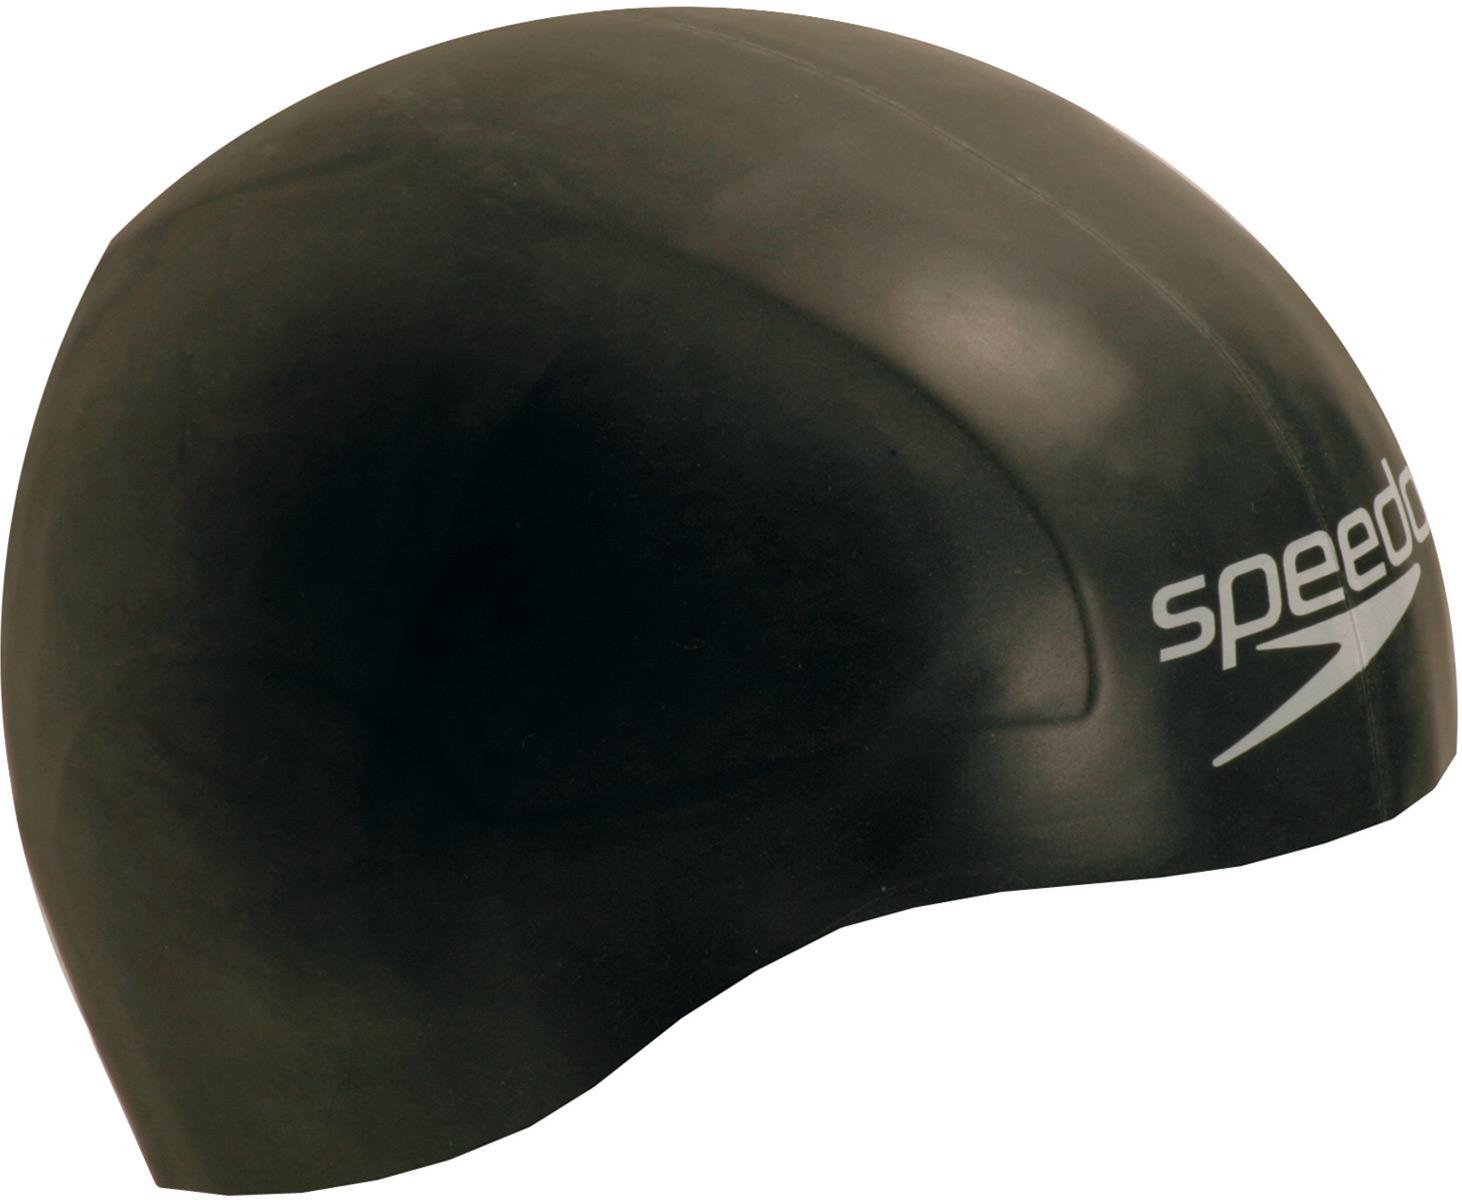 Speedo Aqua V Racing Cap - Black